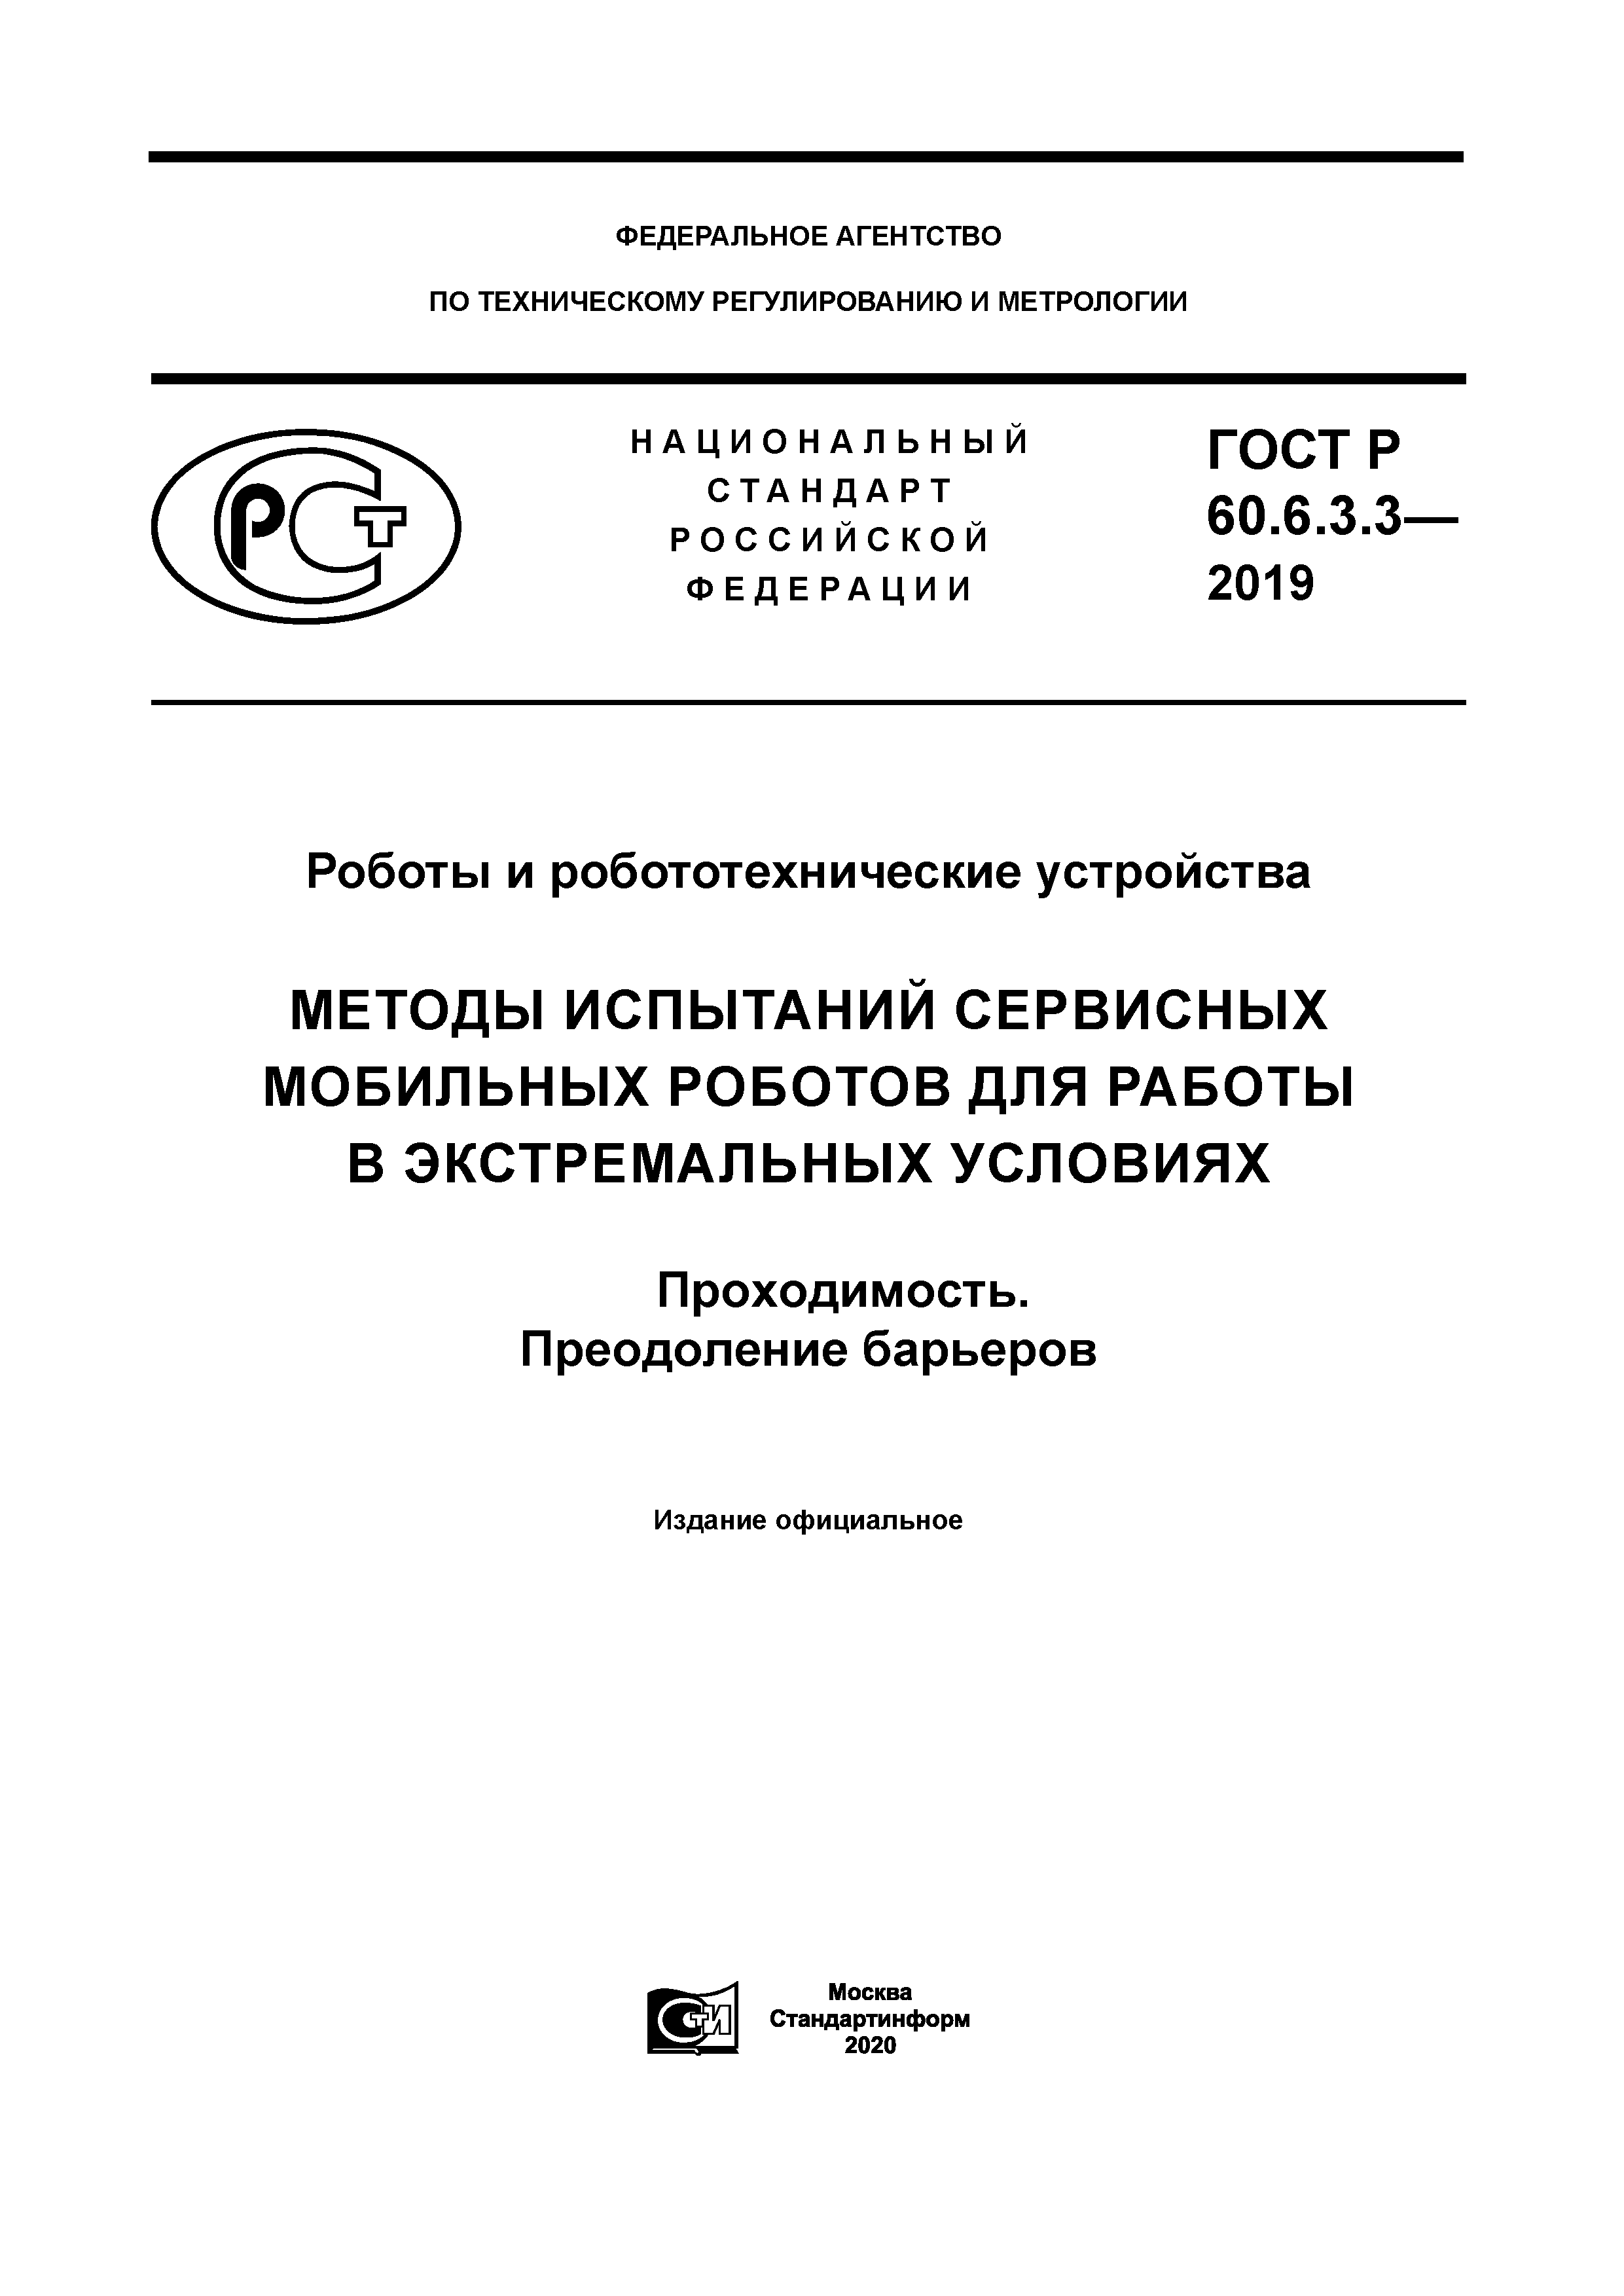 ГОСТ Р 60.6.3.3-2019